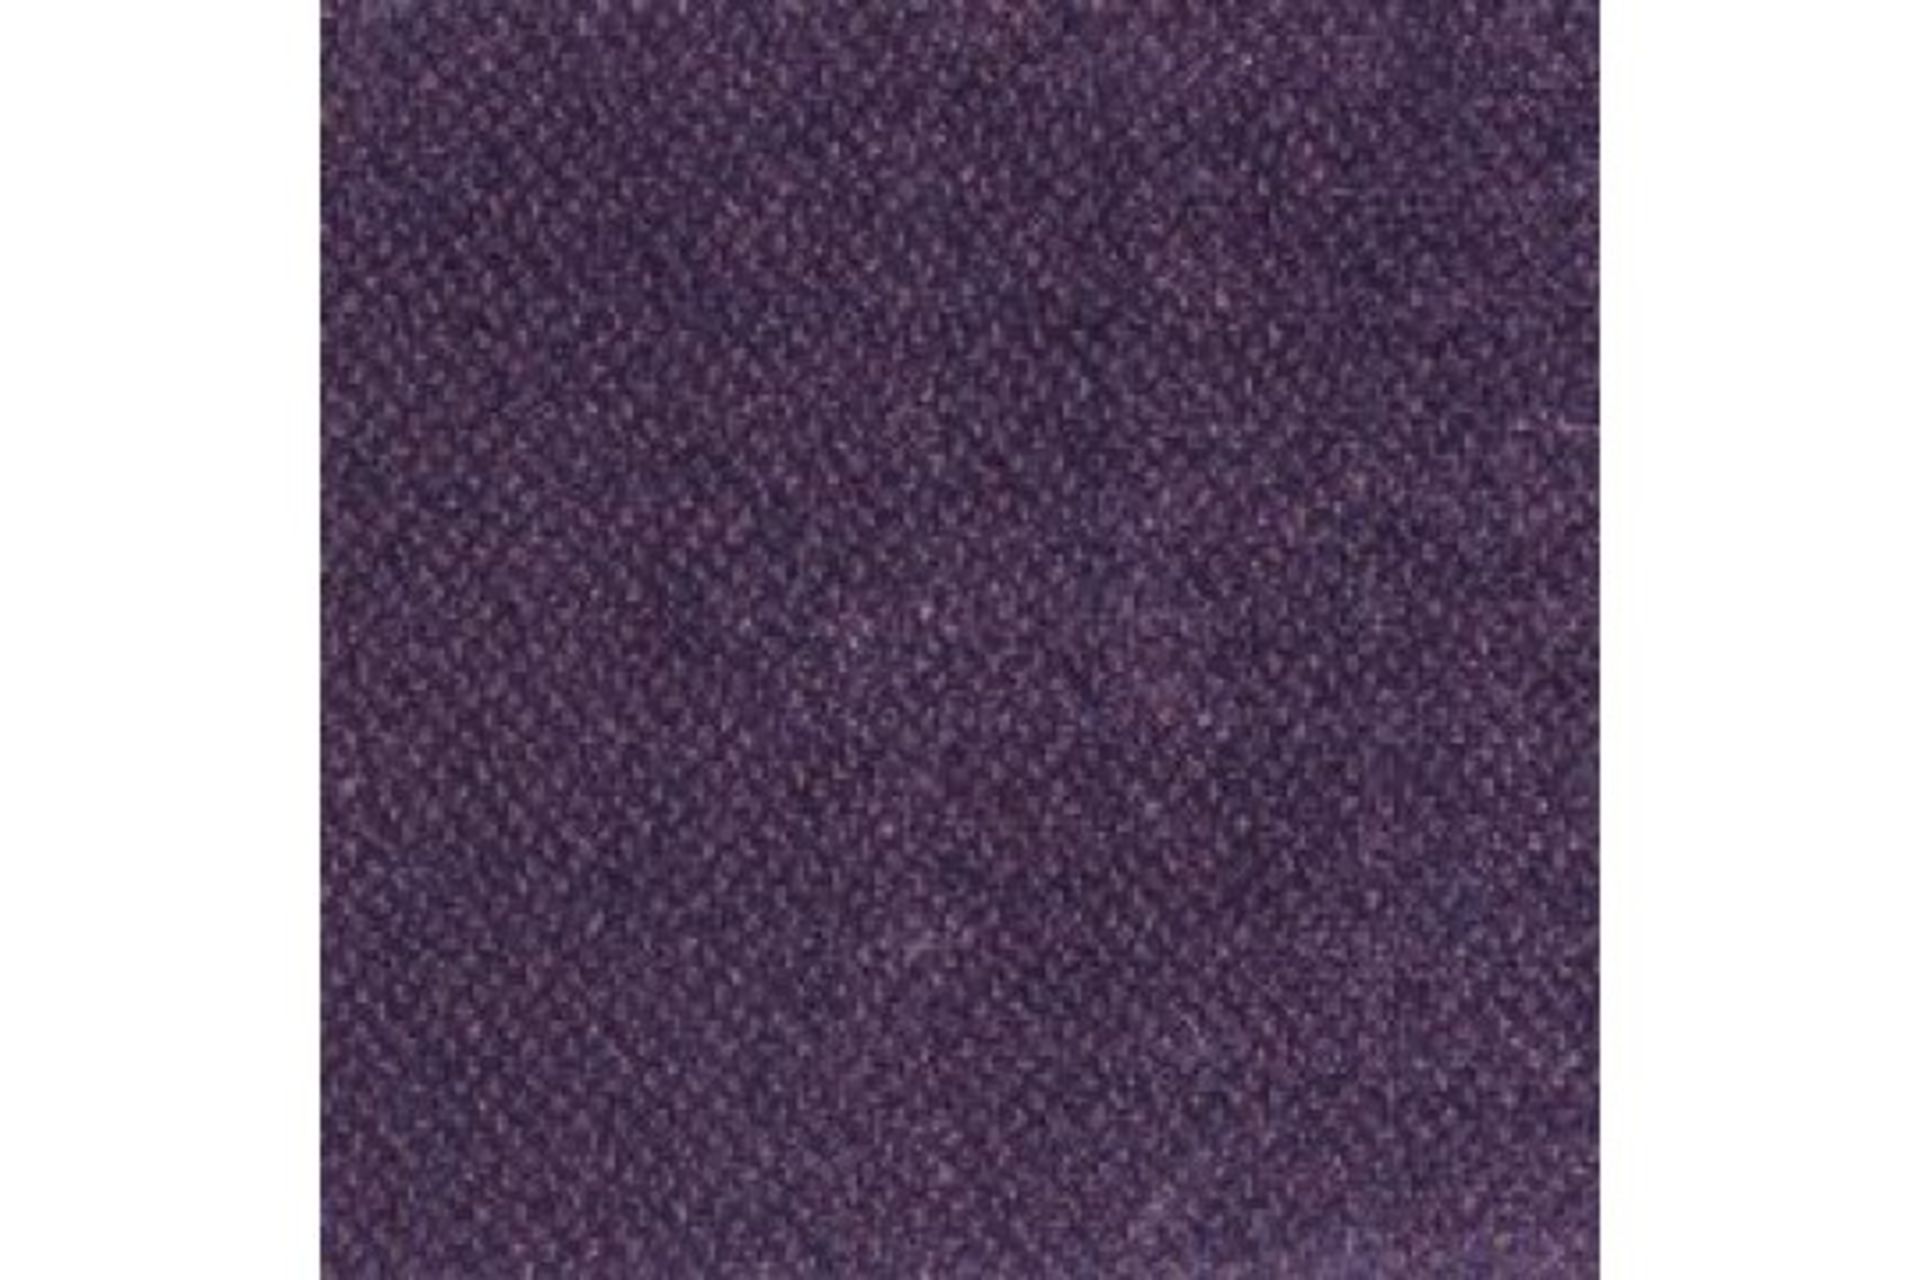 Gradus Genus Heavy Duty Contract Carpet - Velvet Plum

11x2m - Total 22m2